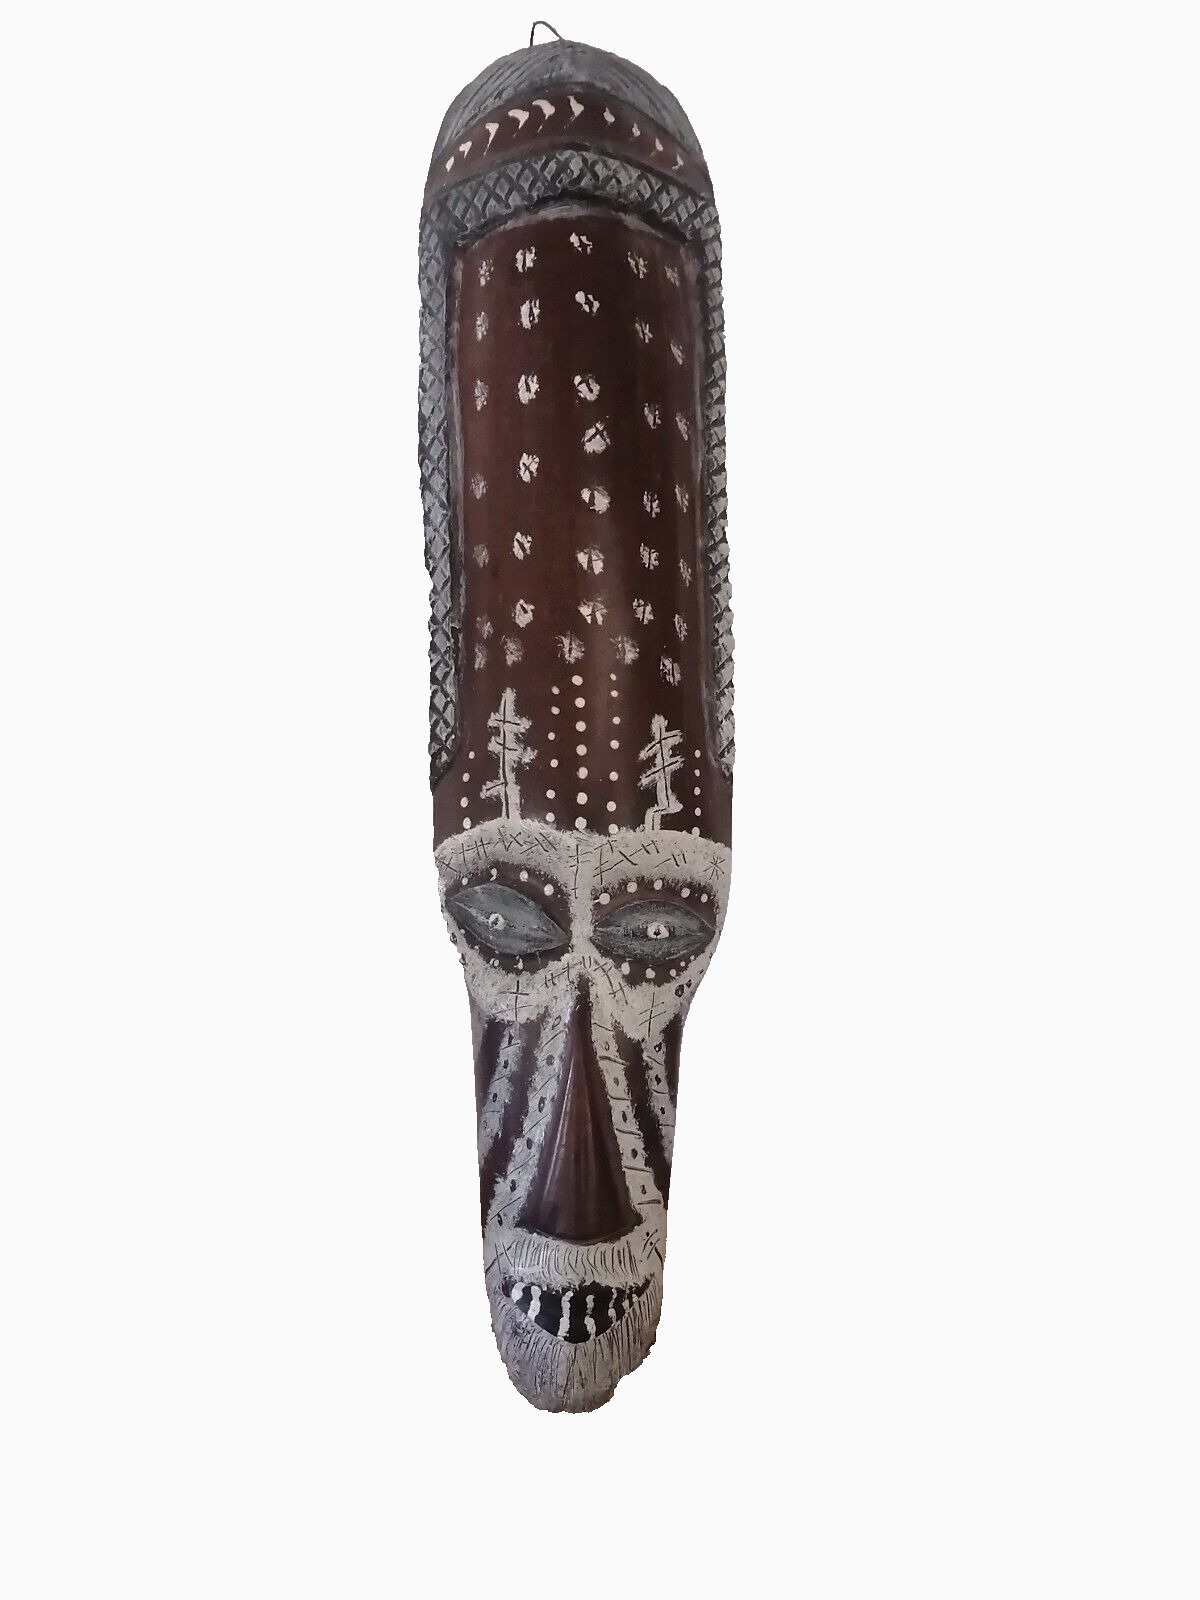 Baron Samedi Voodoo Doll, African Voodoo Temple Totem Mask